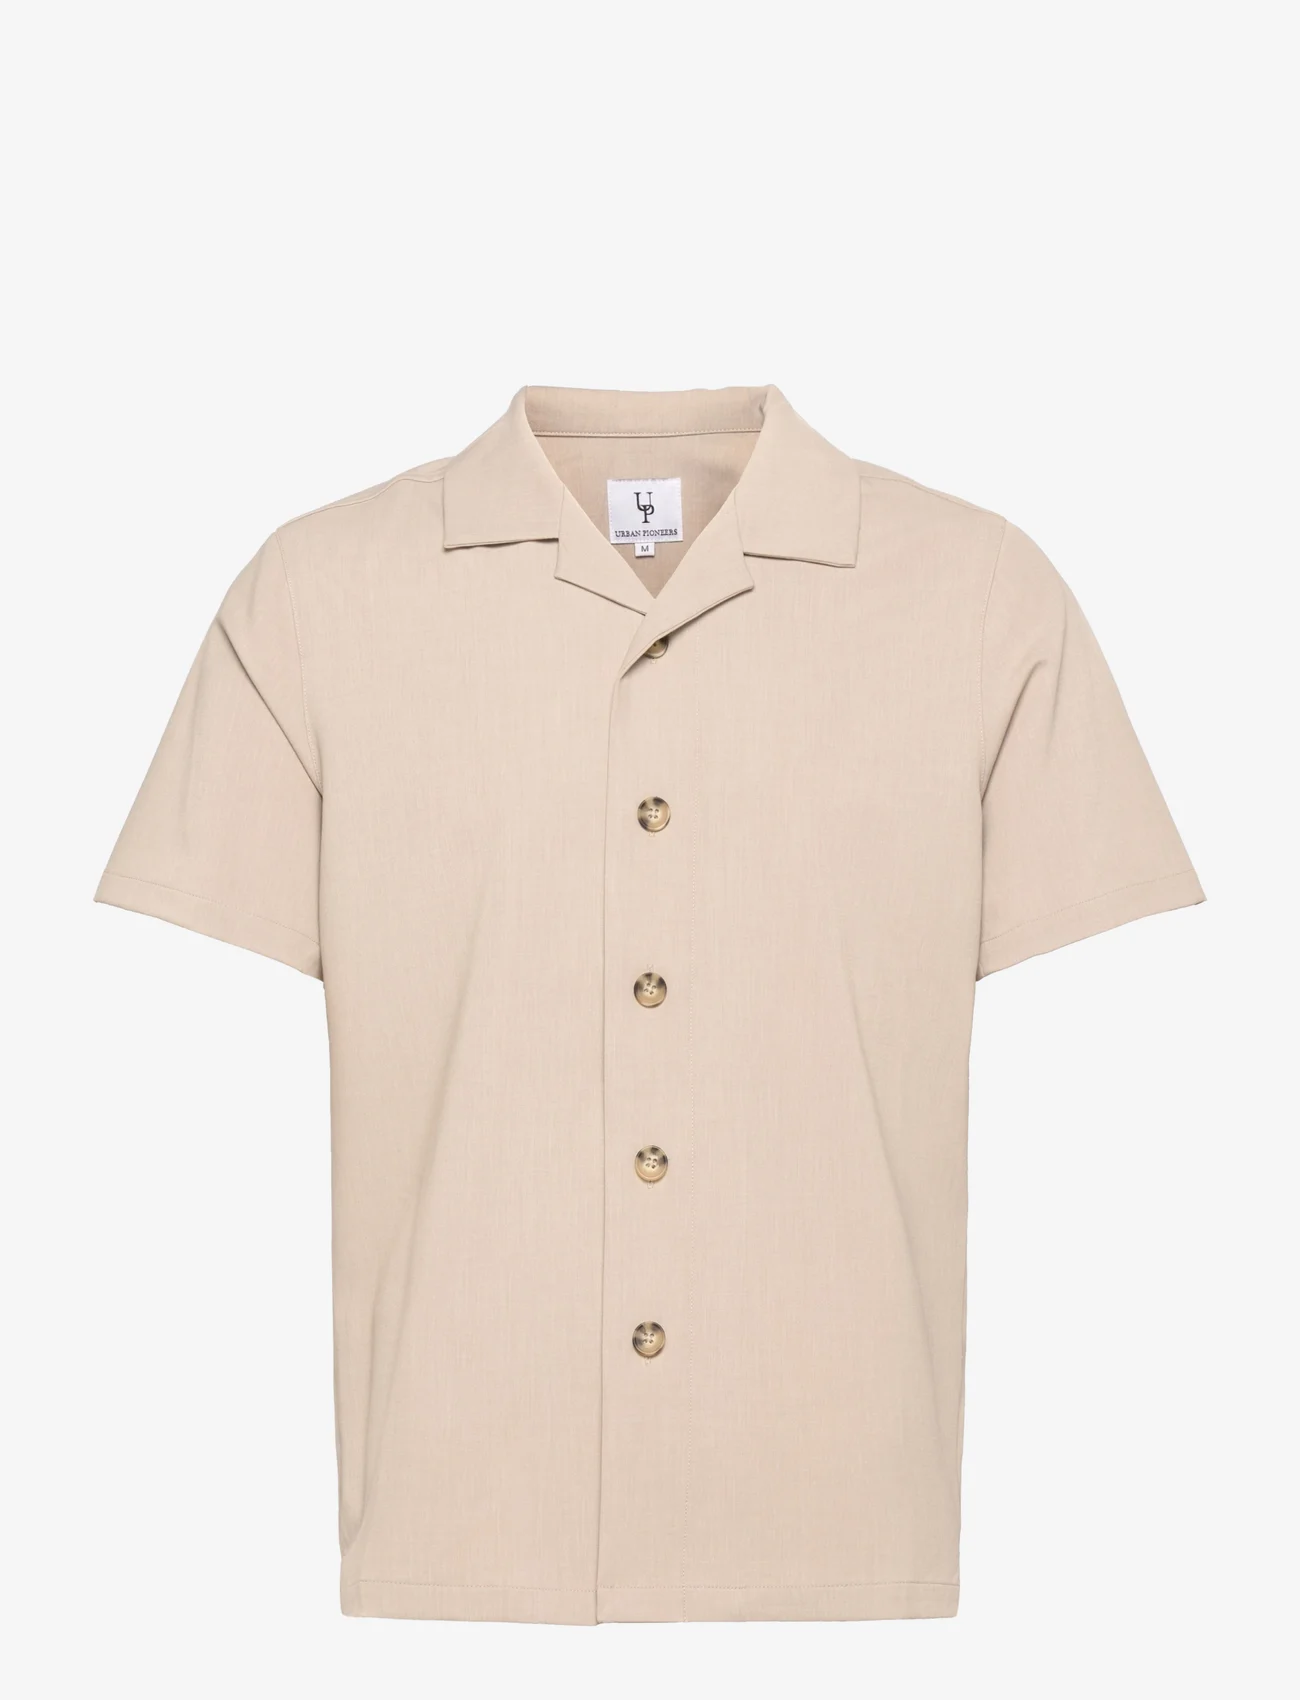 Urban Pioneers - Sheen Shirt - basic shirts - khaki - 0